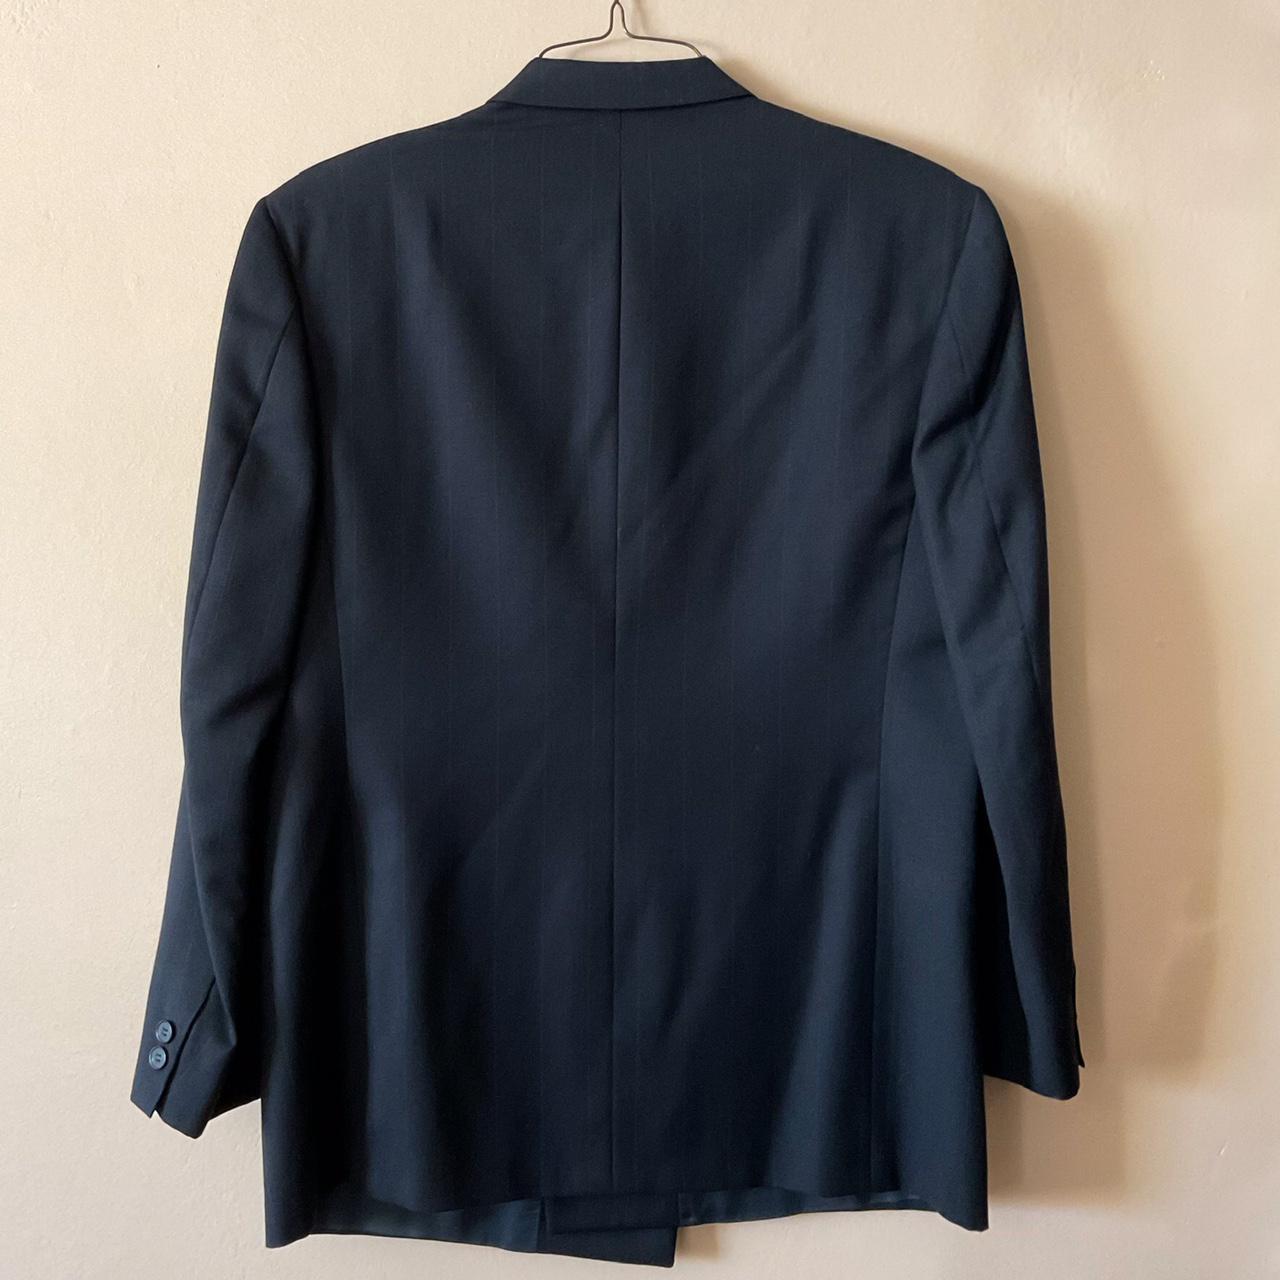 Uomo Moda Stile Italiano Blazer Suit L: 31” Pit to... - Depop